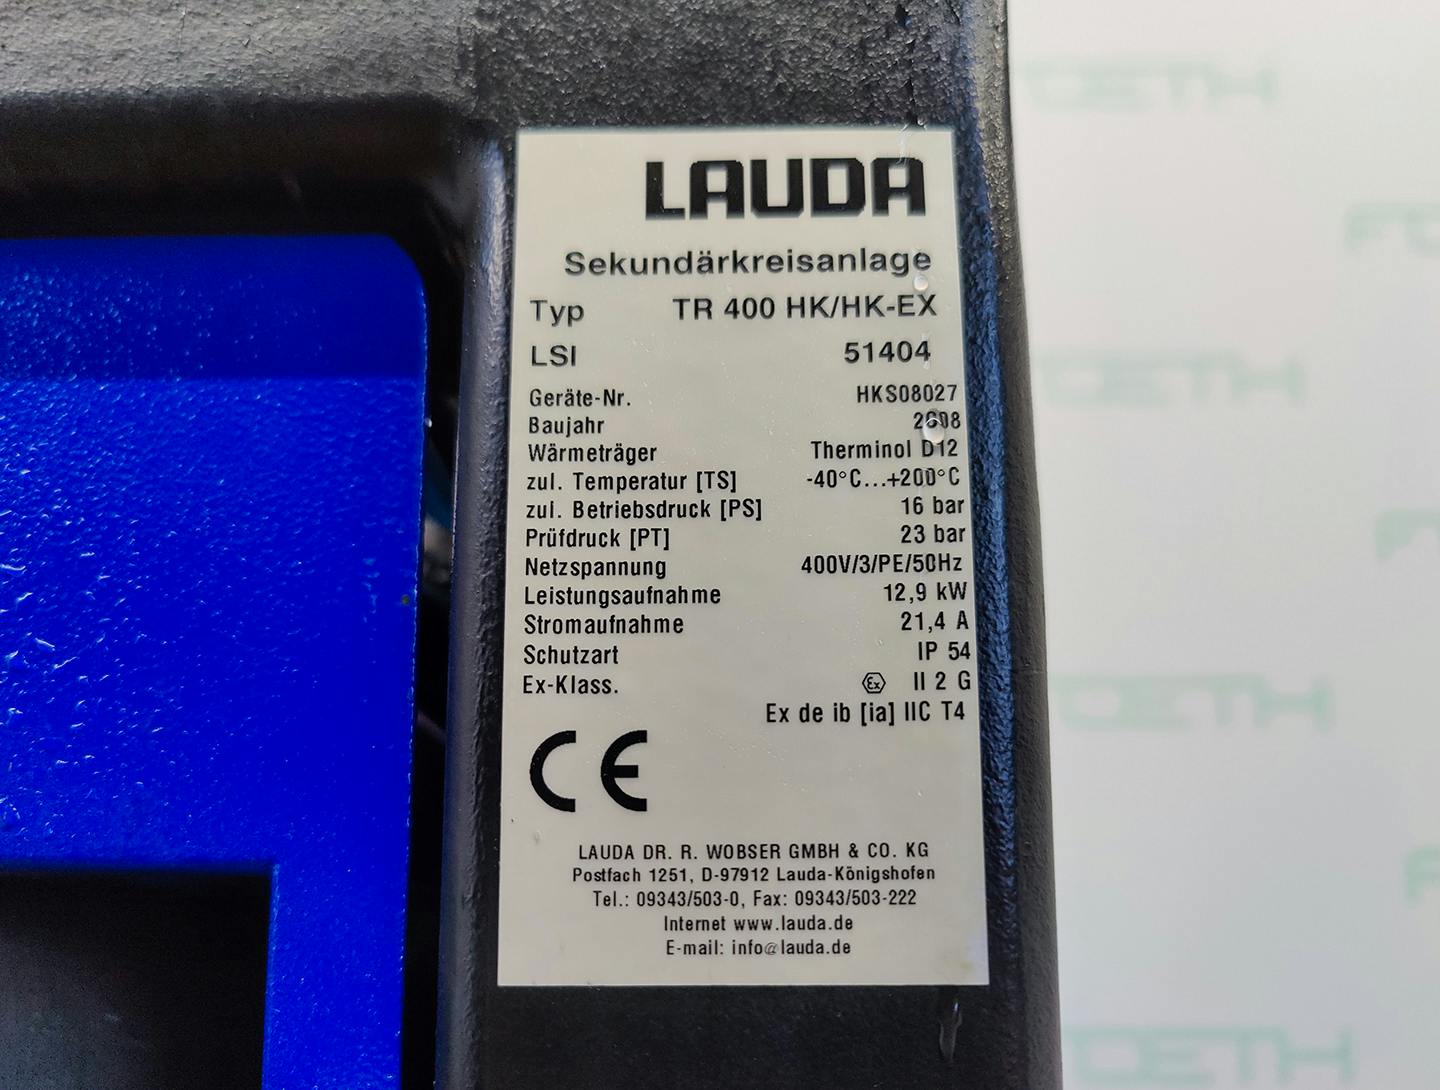 Lauda TR400 HK/HK-EX "secondary circuit system" - Thermorégulateur - image 6